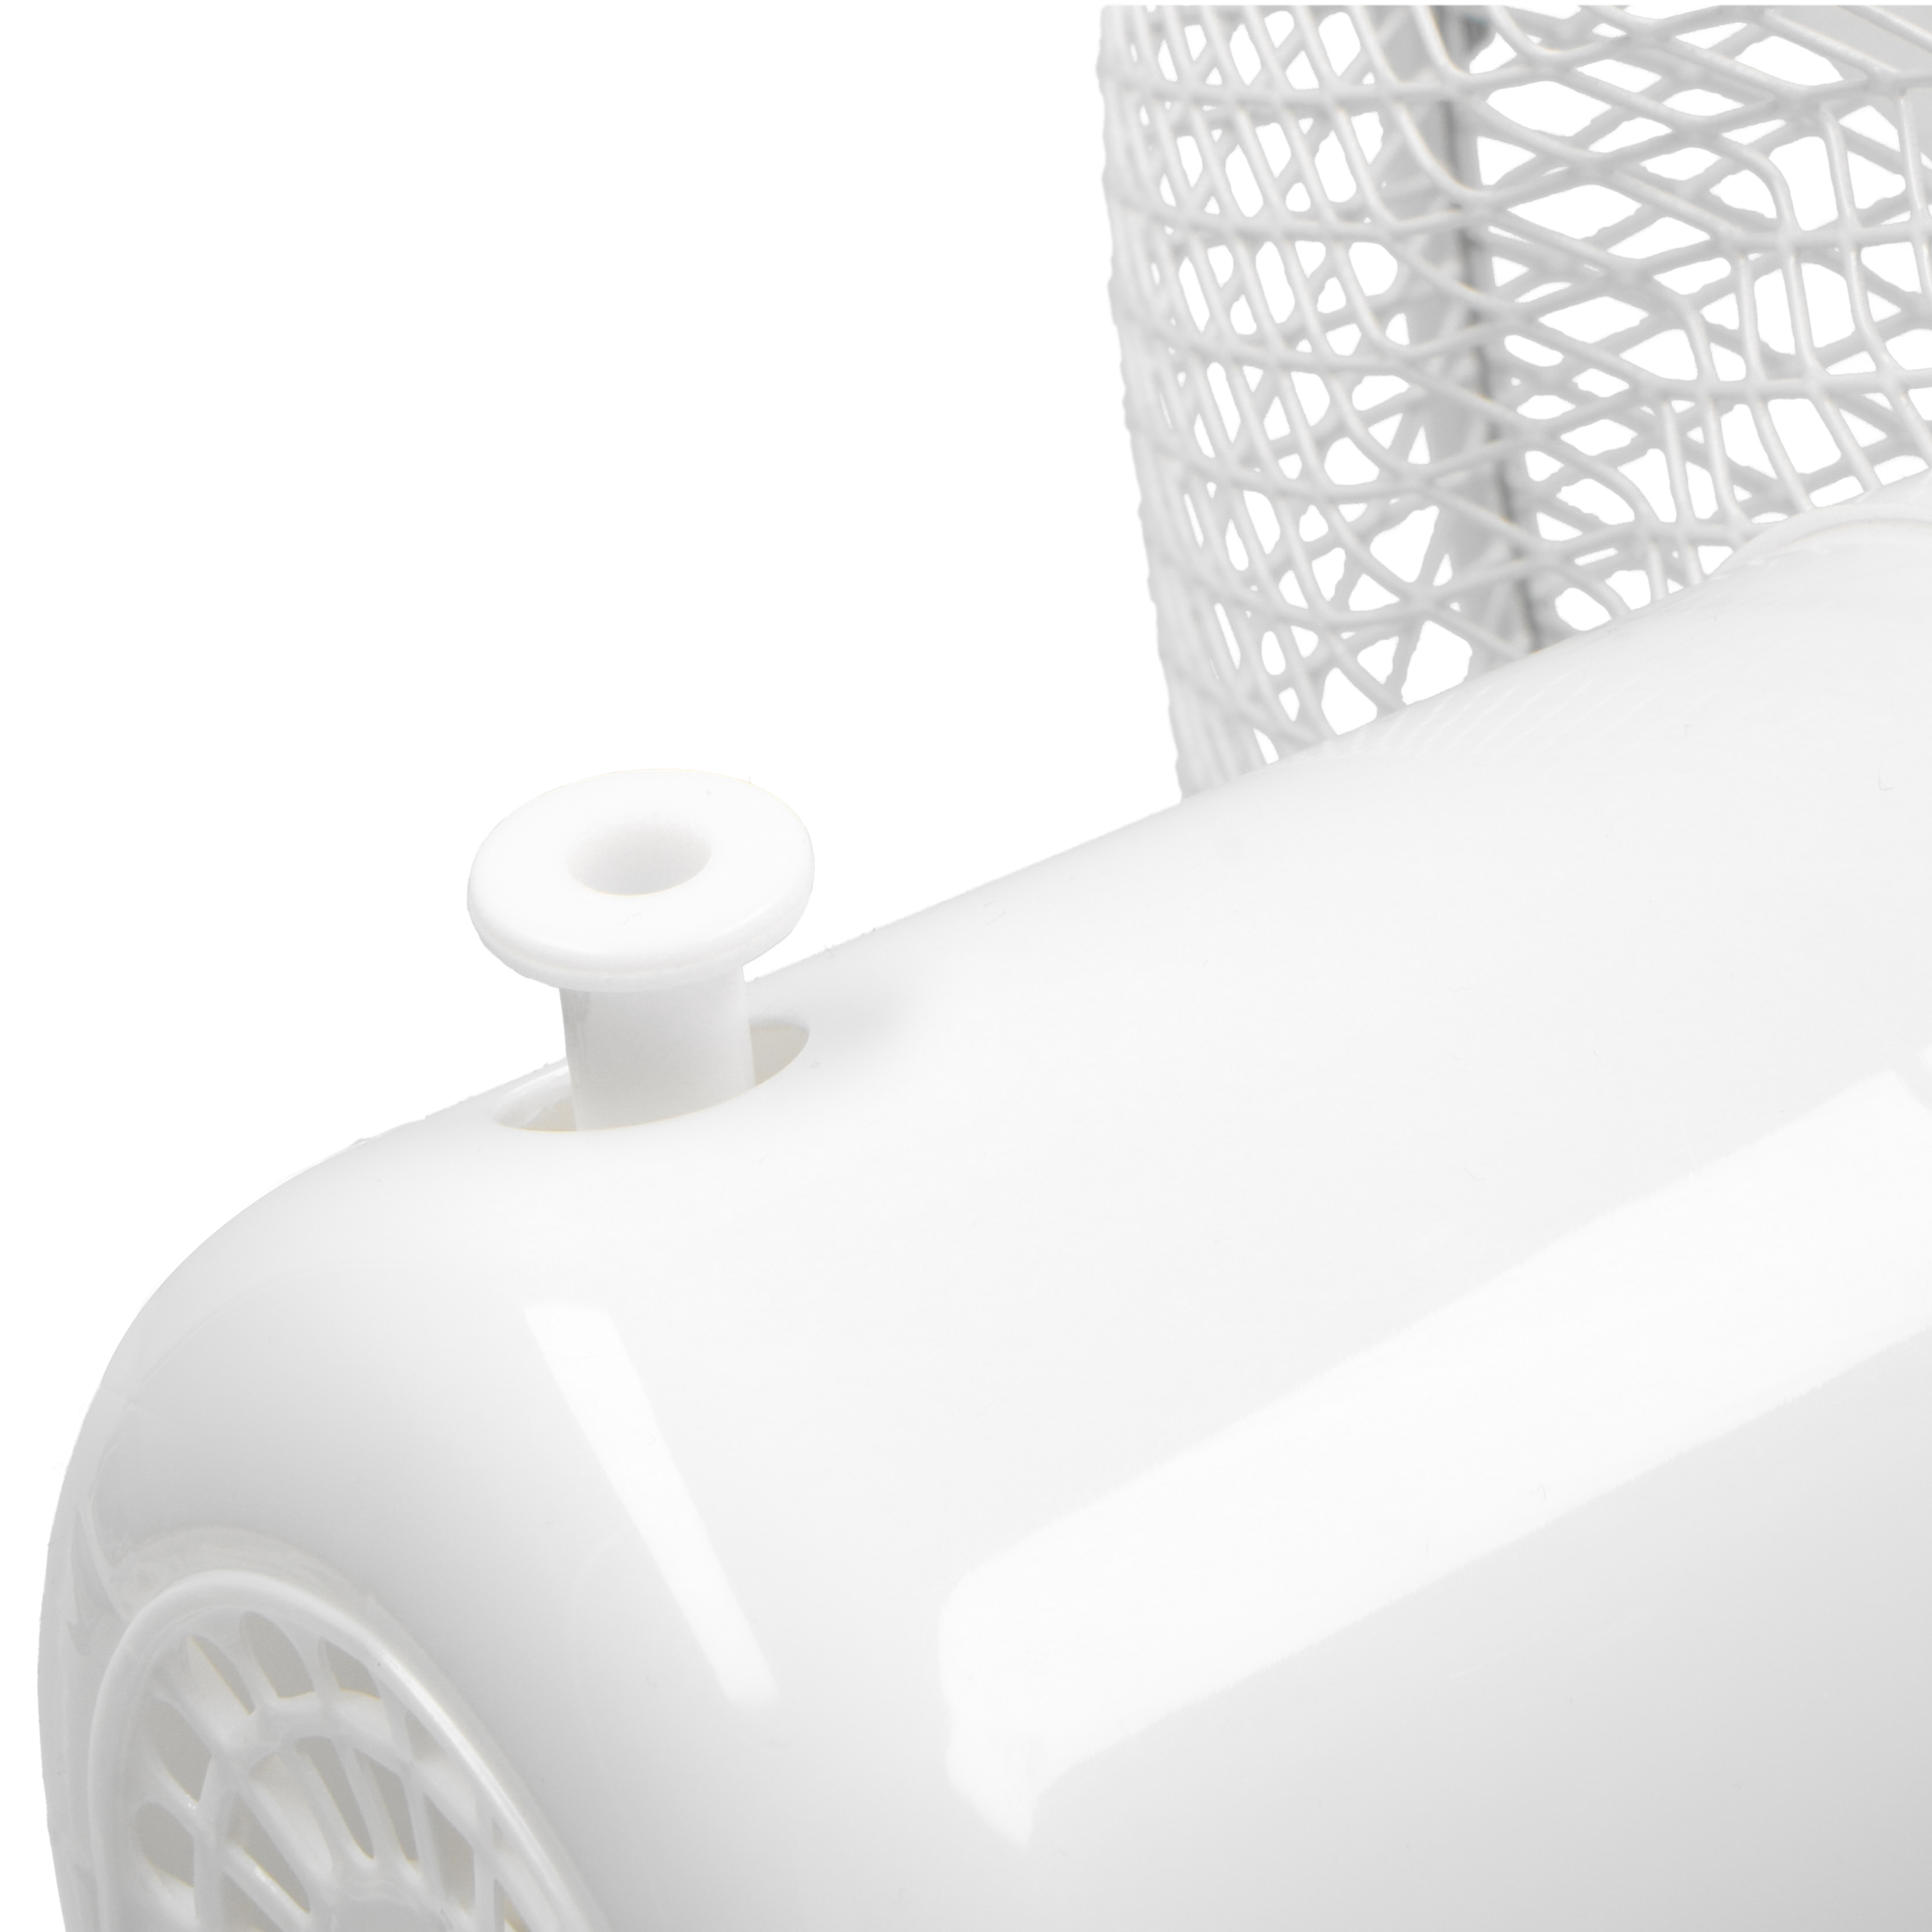 TREBS 99381 - Tisch Ventilator (40 Watt) Weiß